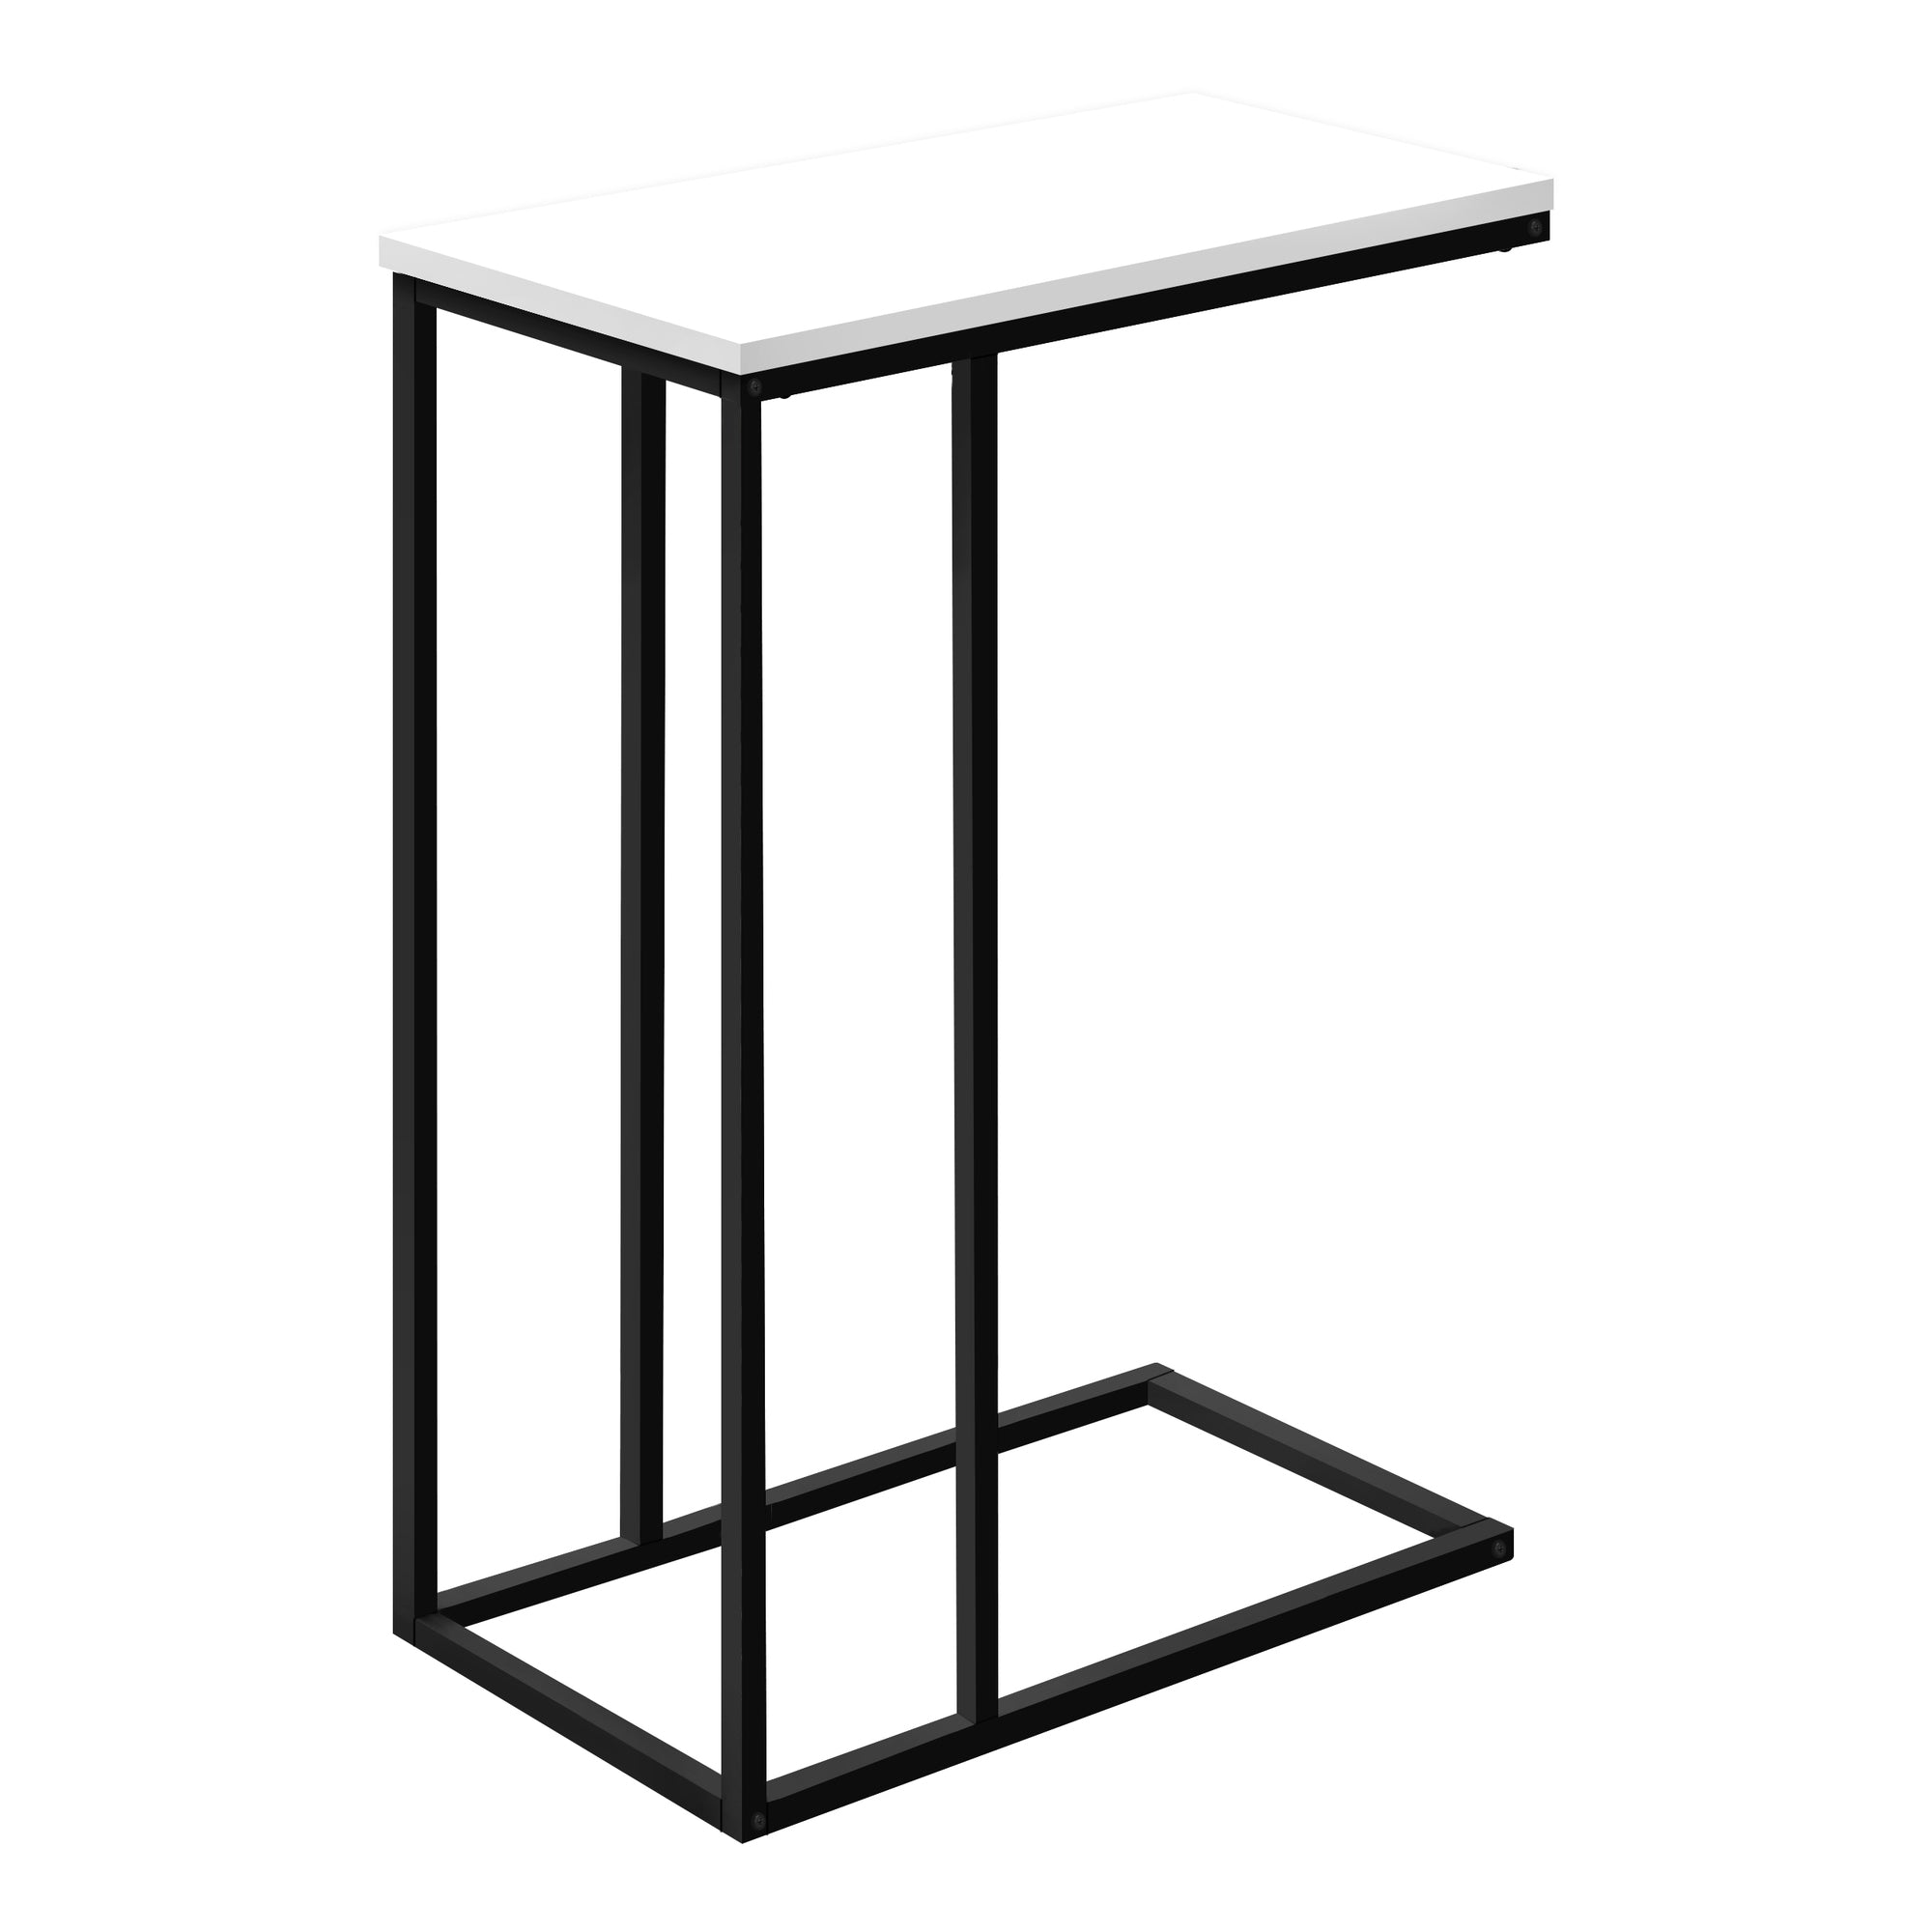 MN-403760    Side Table / C Table - Rectangular / Metal Frame - White